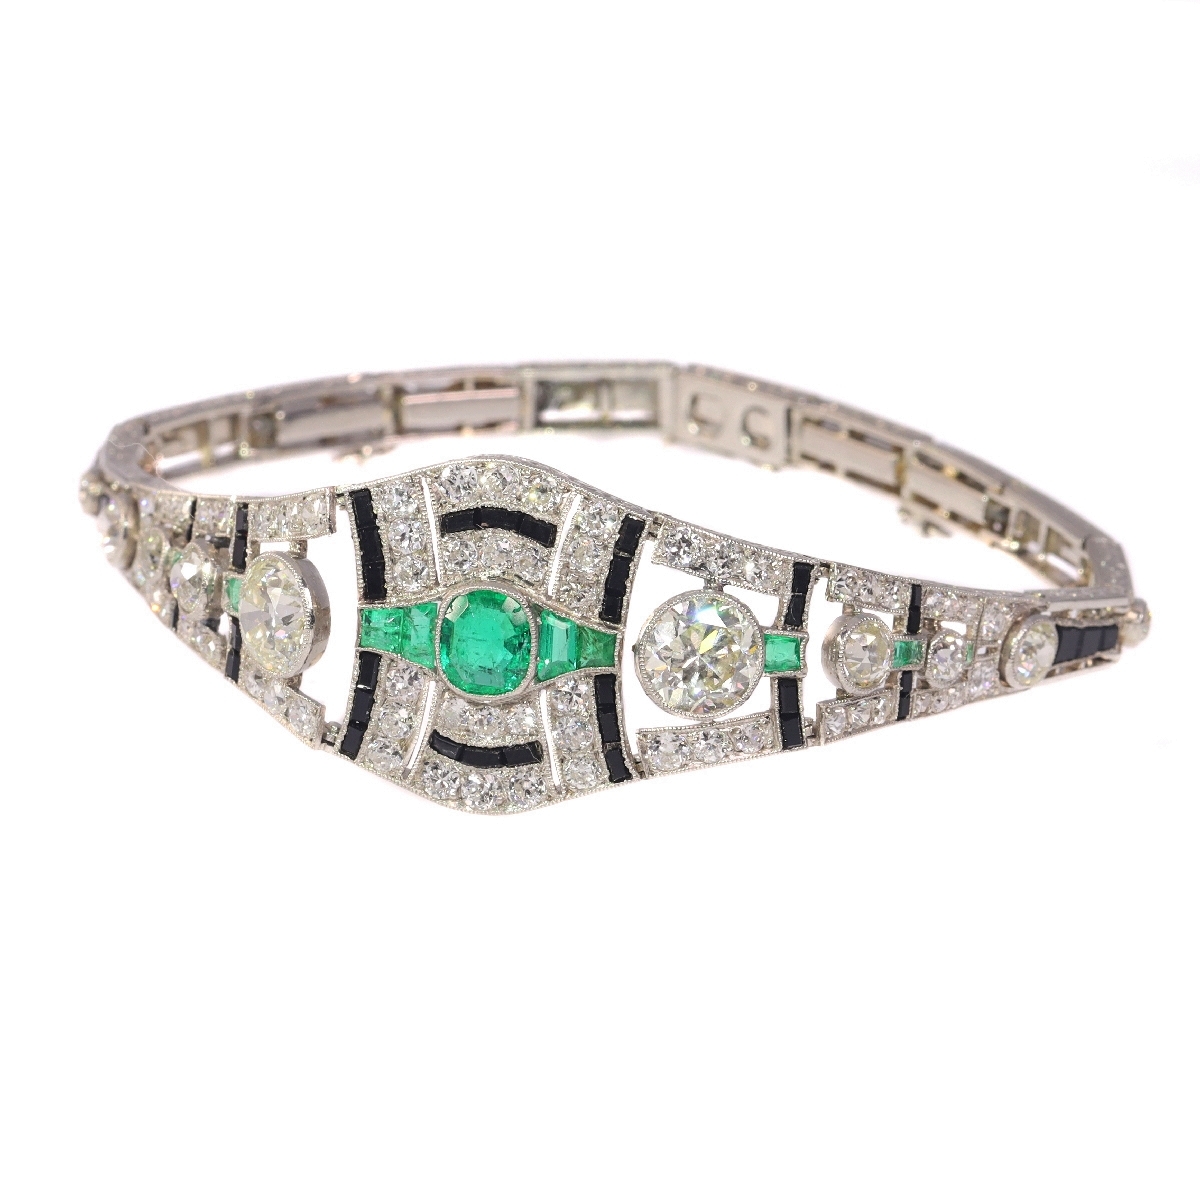 Sophisticated Art Deco Platinum Bracelet: Diamonds, Emeralds, and Onyx